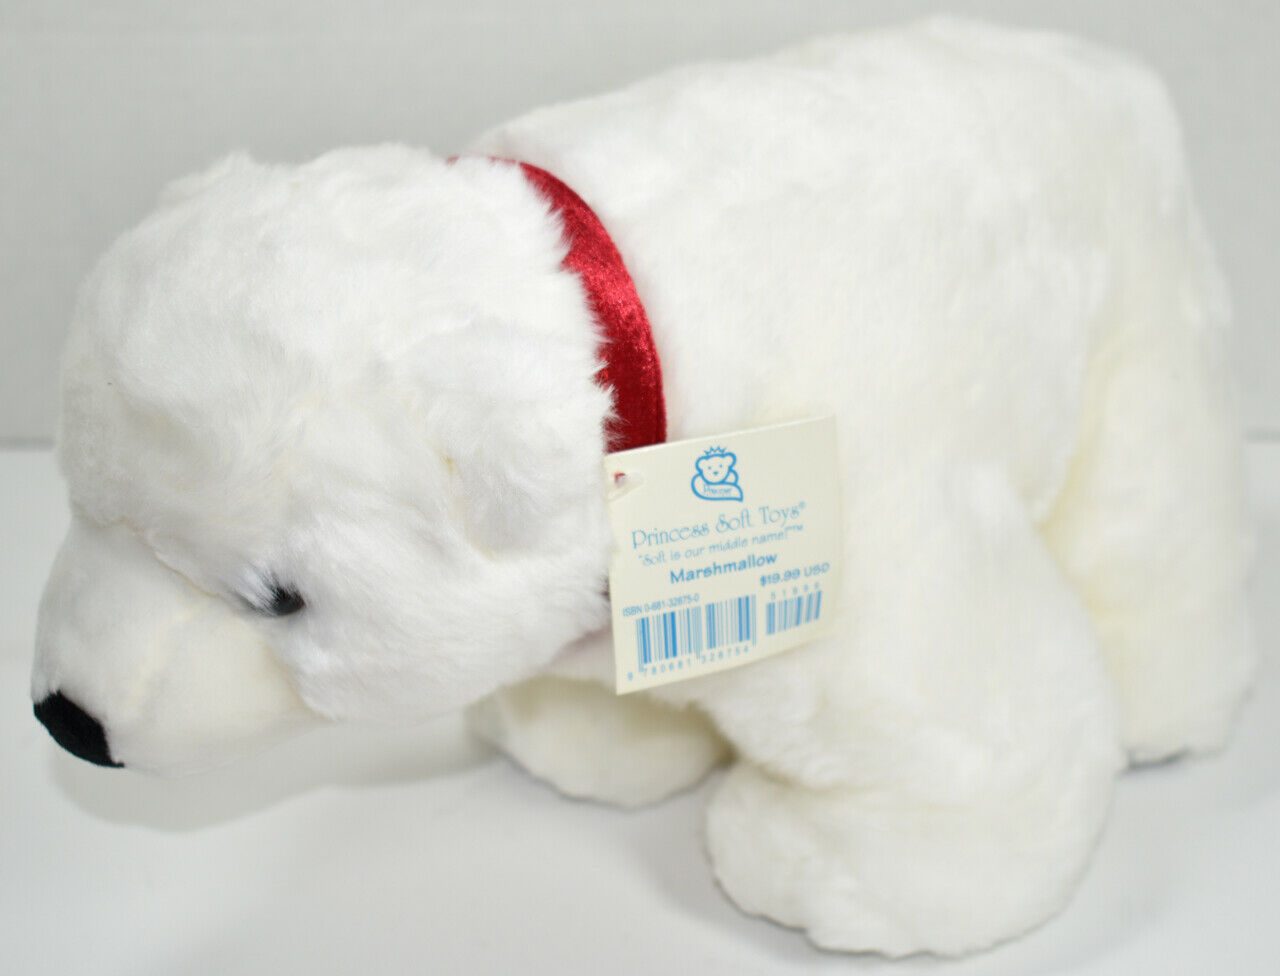 Princess Soft Toys Marshmallow The Polar Bear Stuffed Animal Plush Soft Toy New